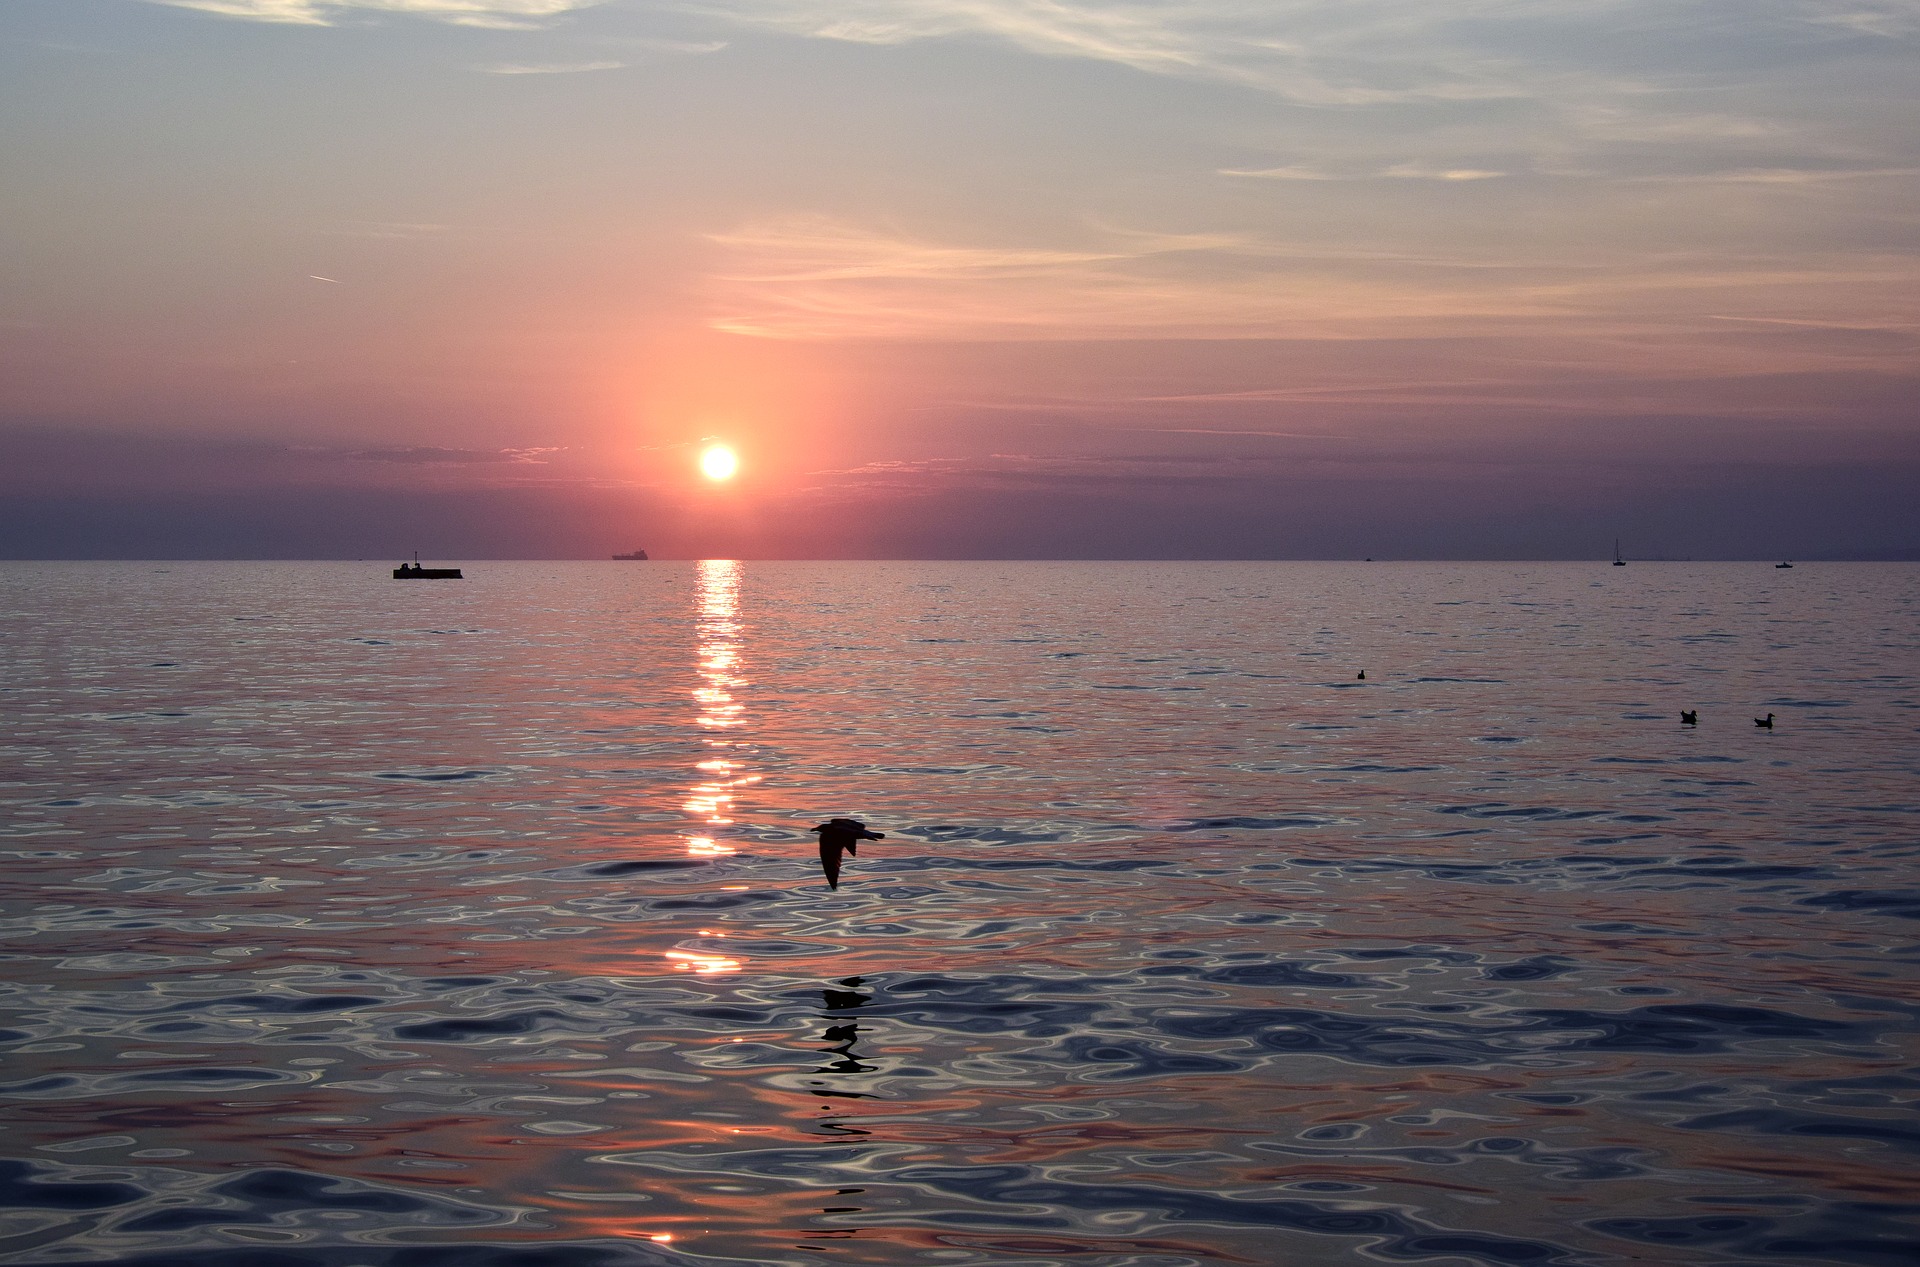 Sunset on the Adriatic sea